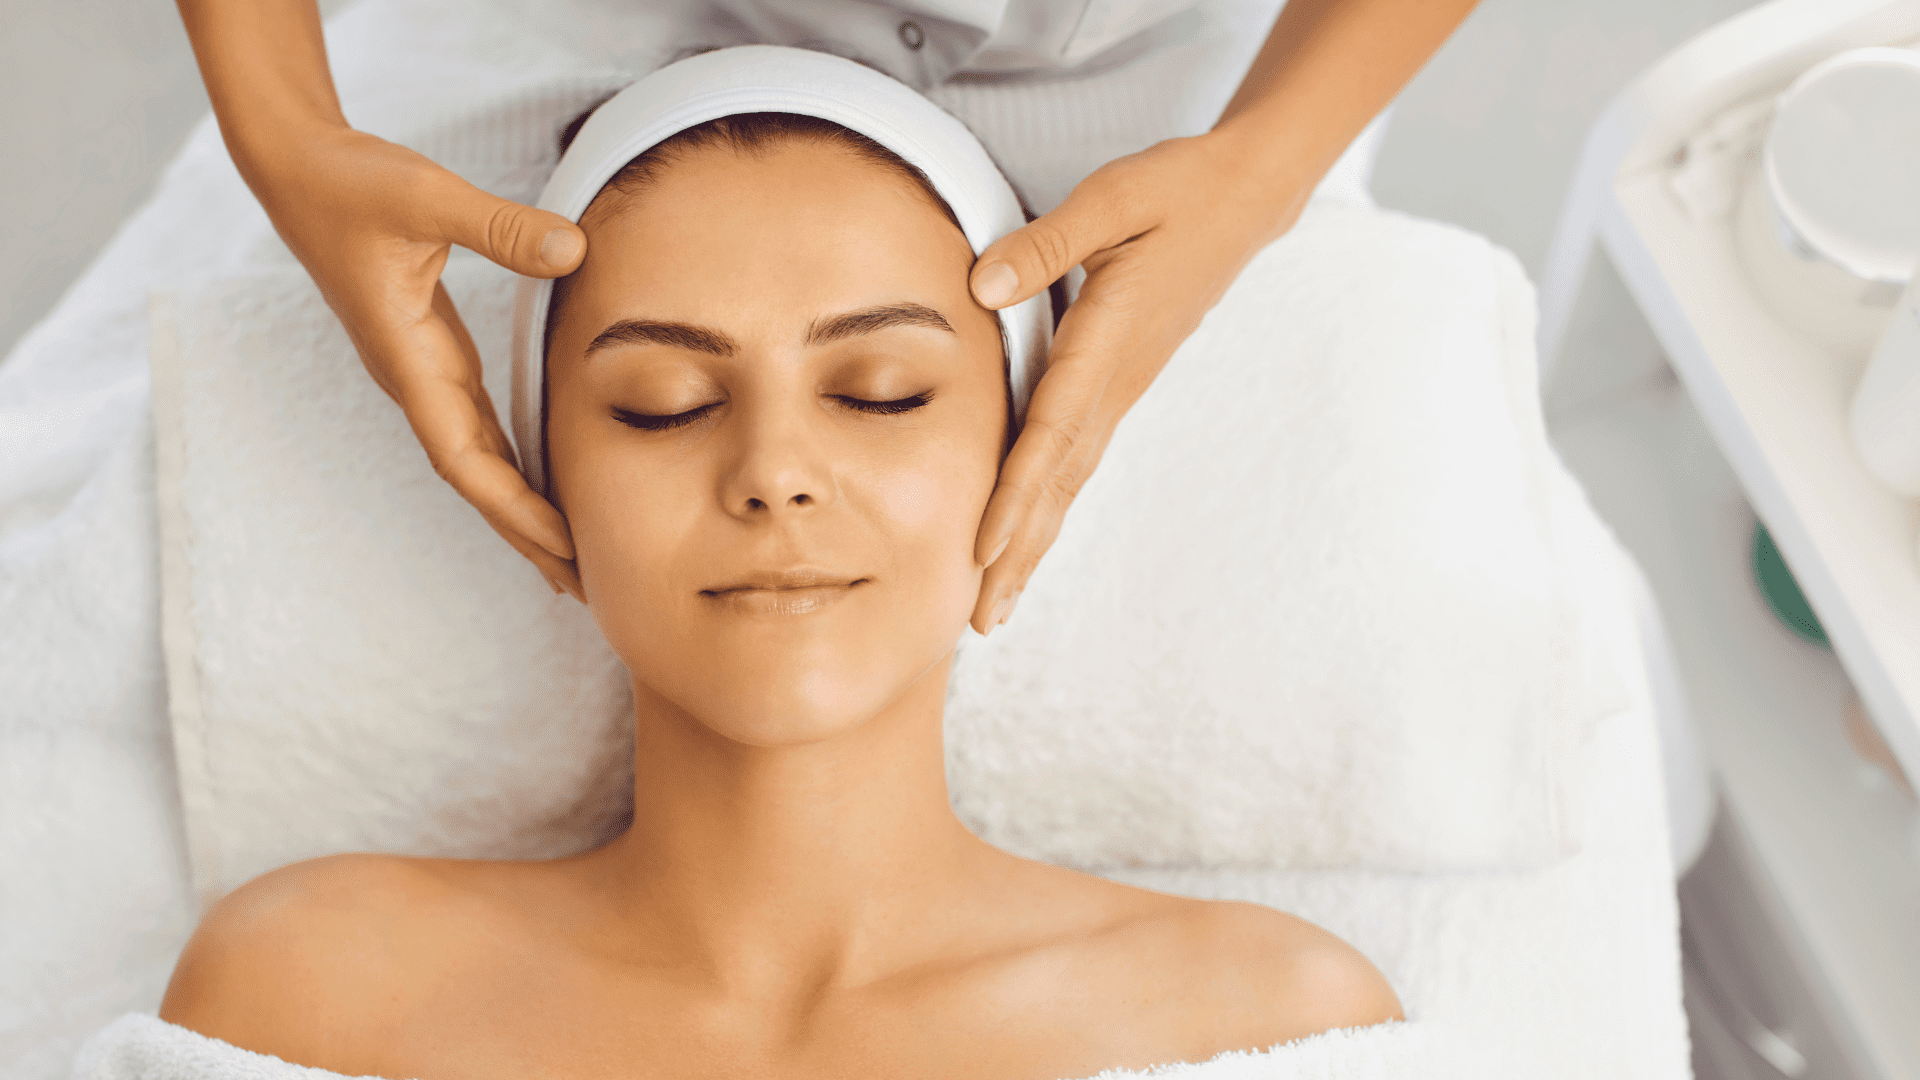 What Is Metamorphic Massage